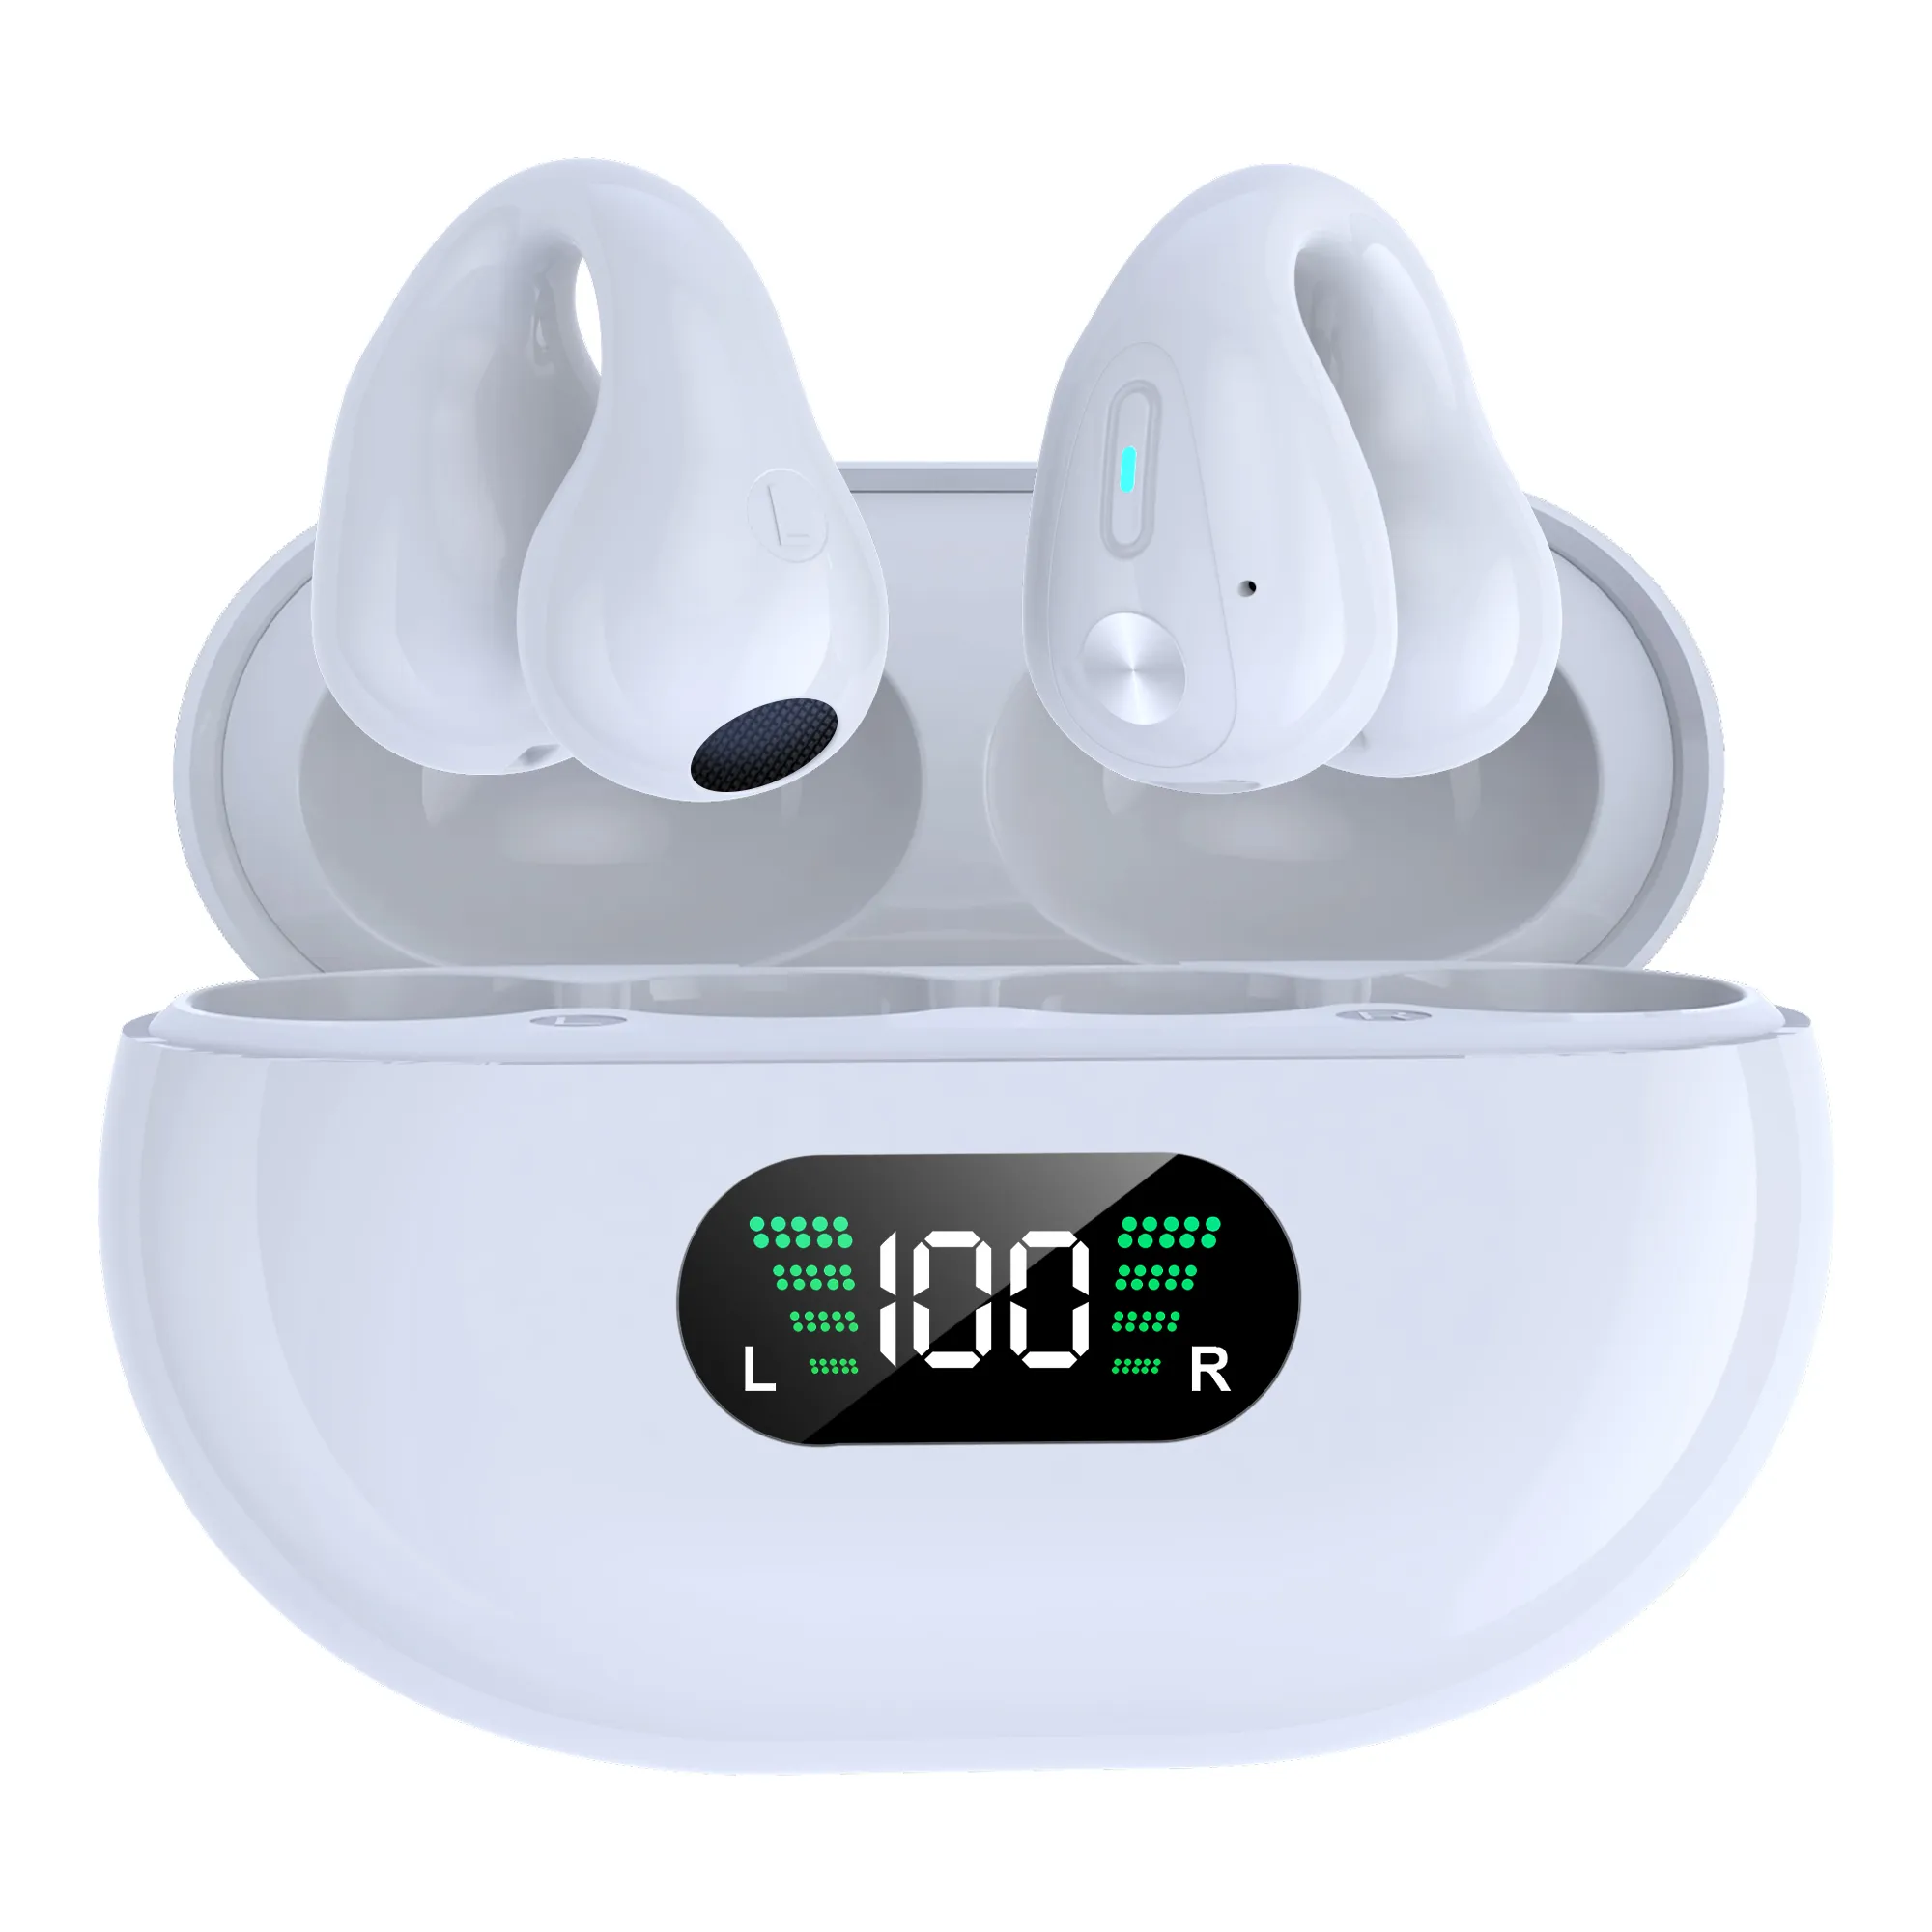 5.3 Bluetooth 헤드셋 귀 마운트 뼈 전도 헤드셋 IPX5 방수 지능형 소음 감소 스포츠 헤드셋 내구성과 편안한 마모